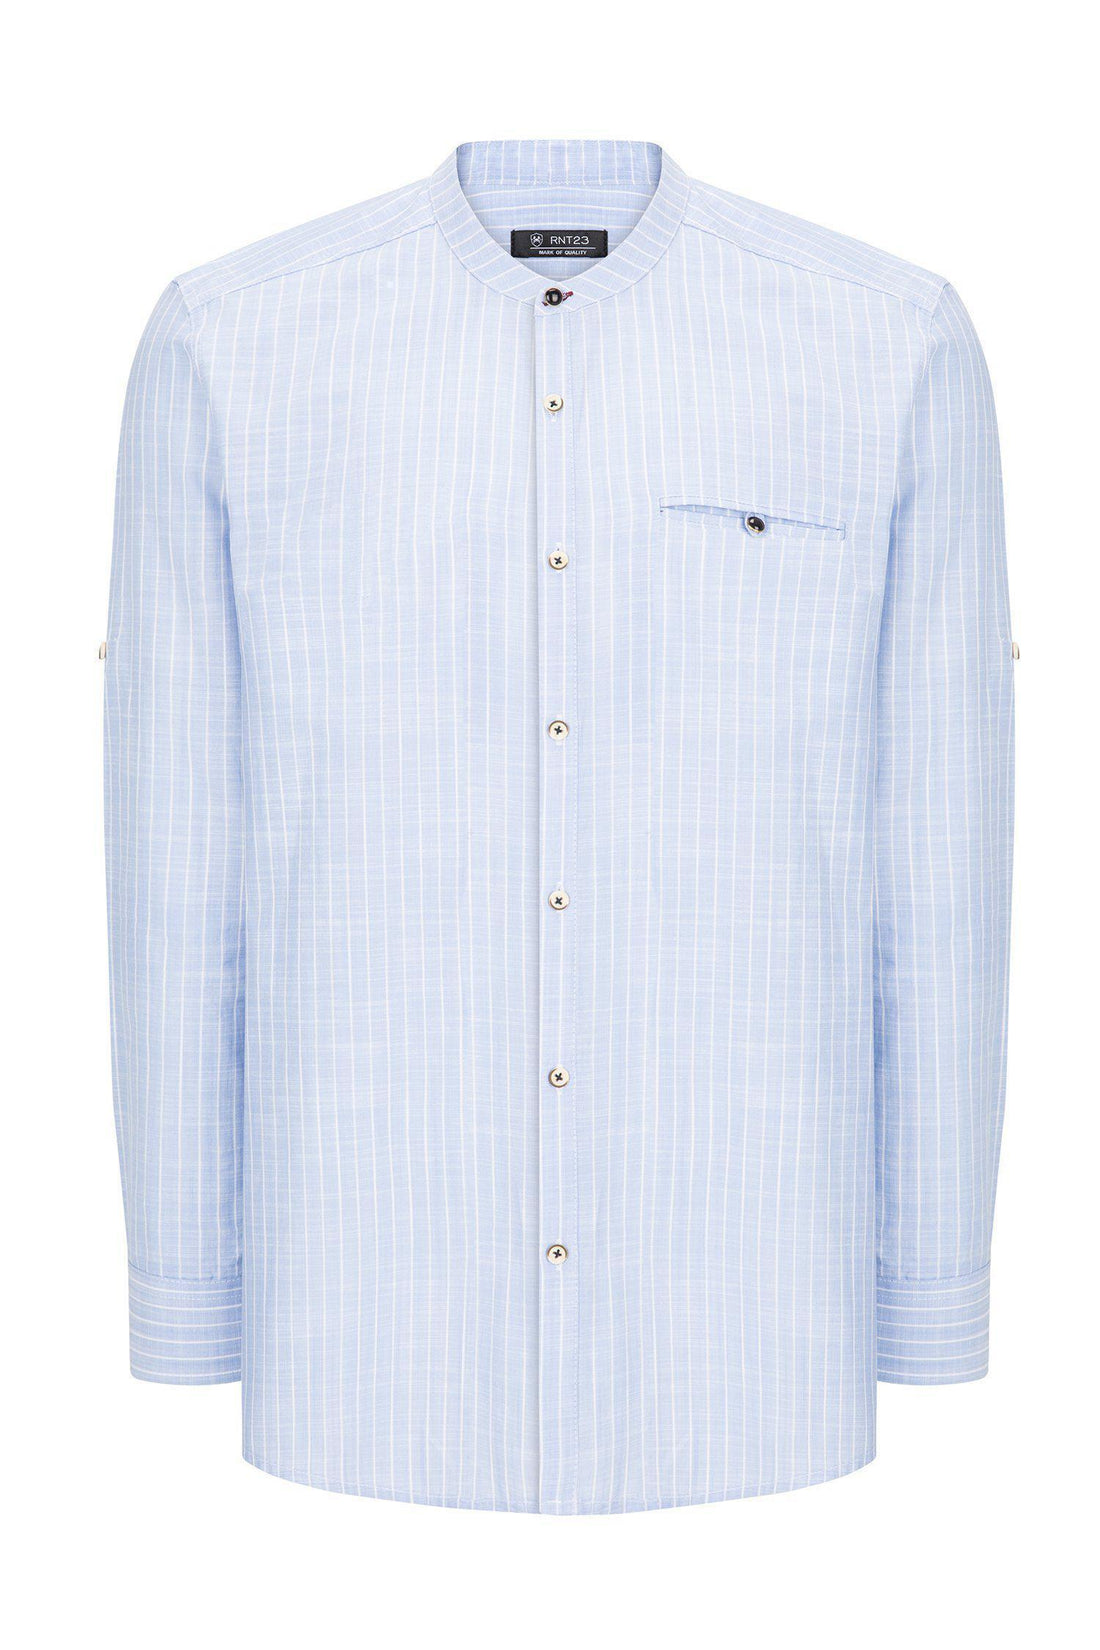 General Striped Cotton Shirt - BLUE - Ron Tomson